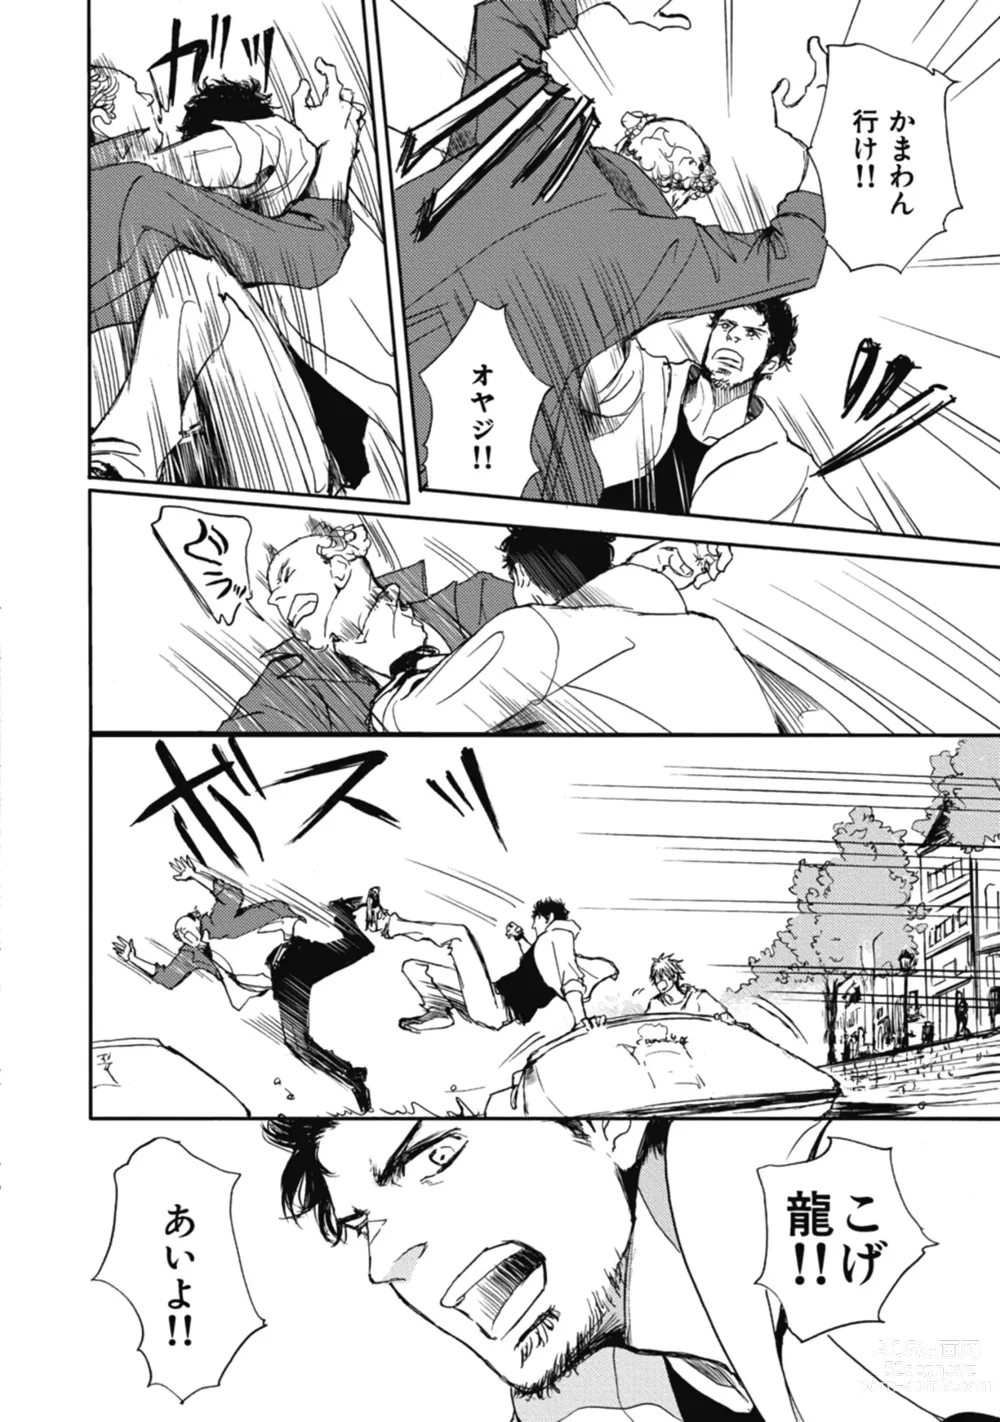 Page 24 of manga Papas Assassin. ~Futari Shite Tonde Yuku.~